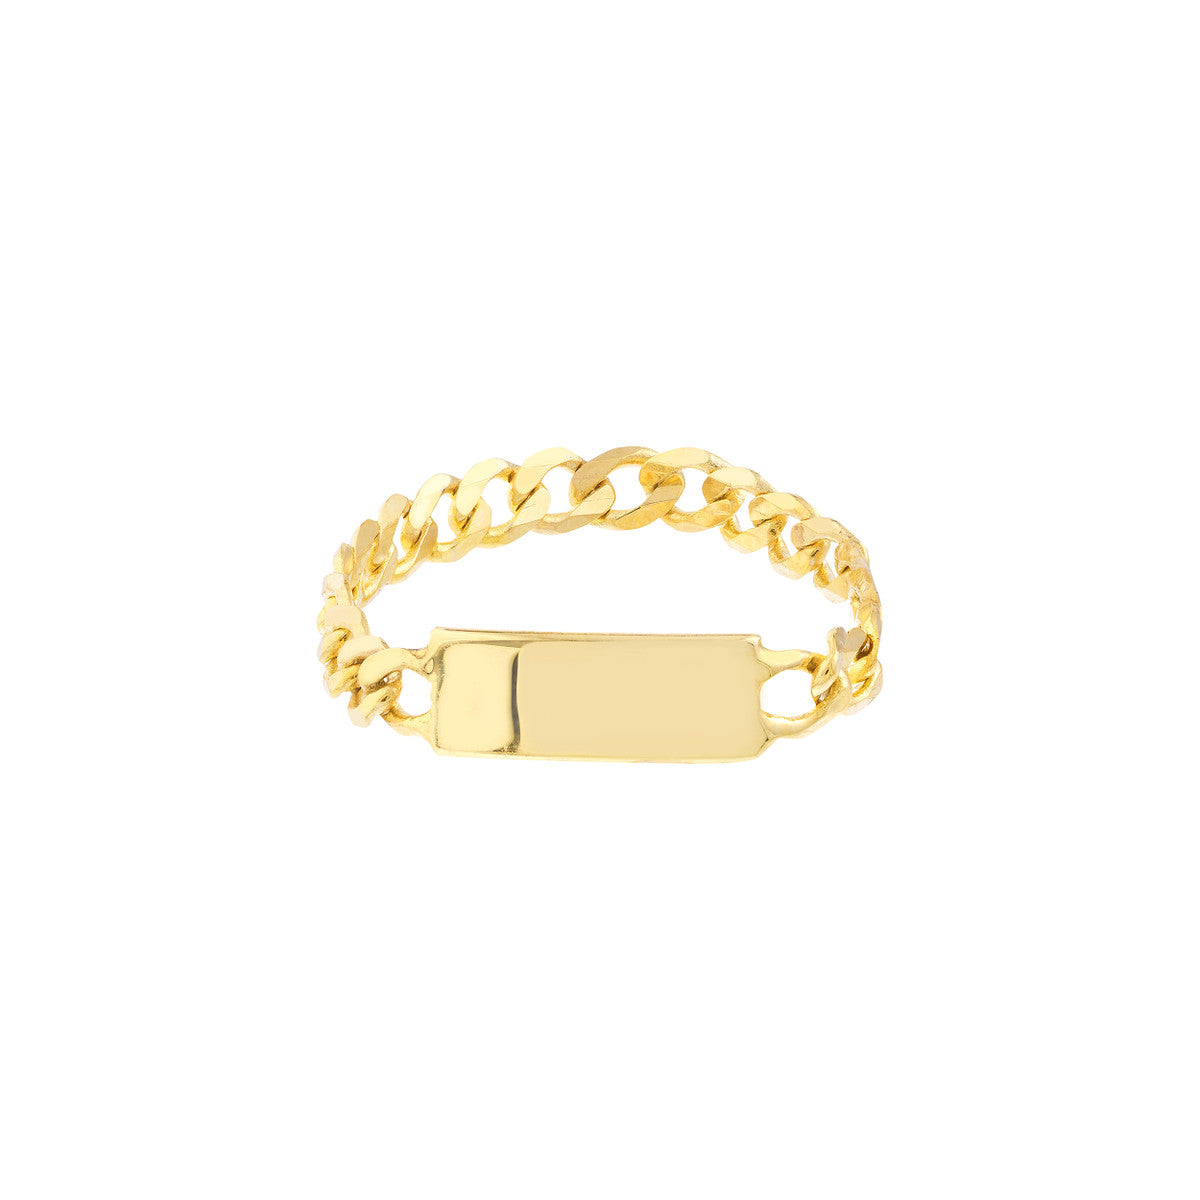 Lady's 14 Karat Yellow Gold Mini ID Fashion Ring